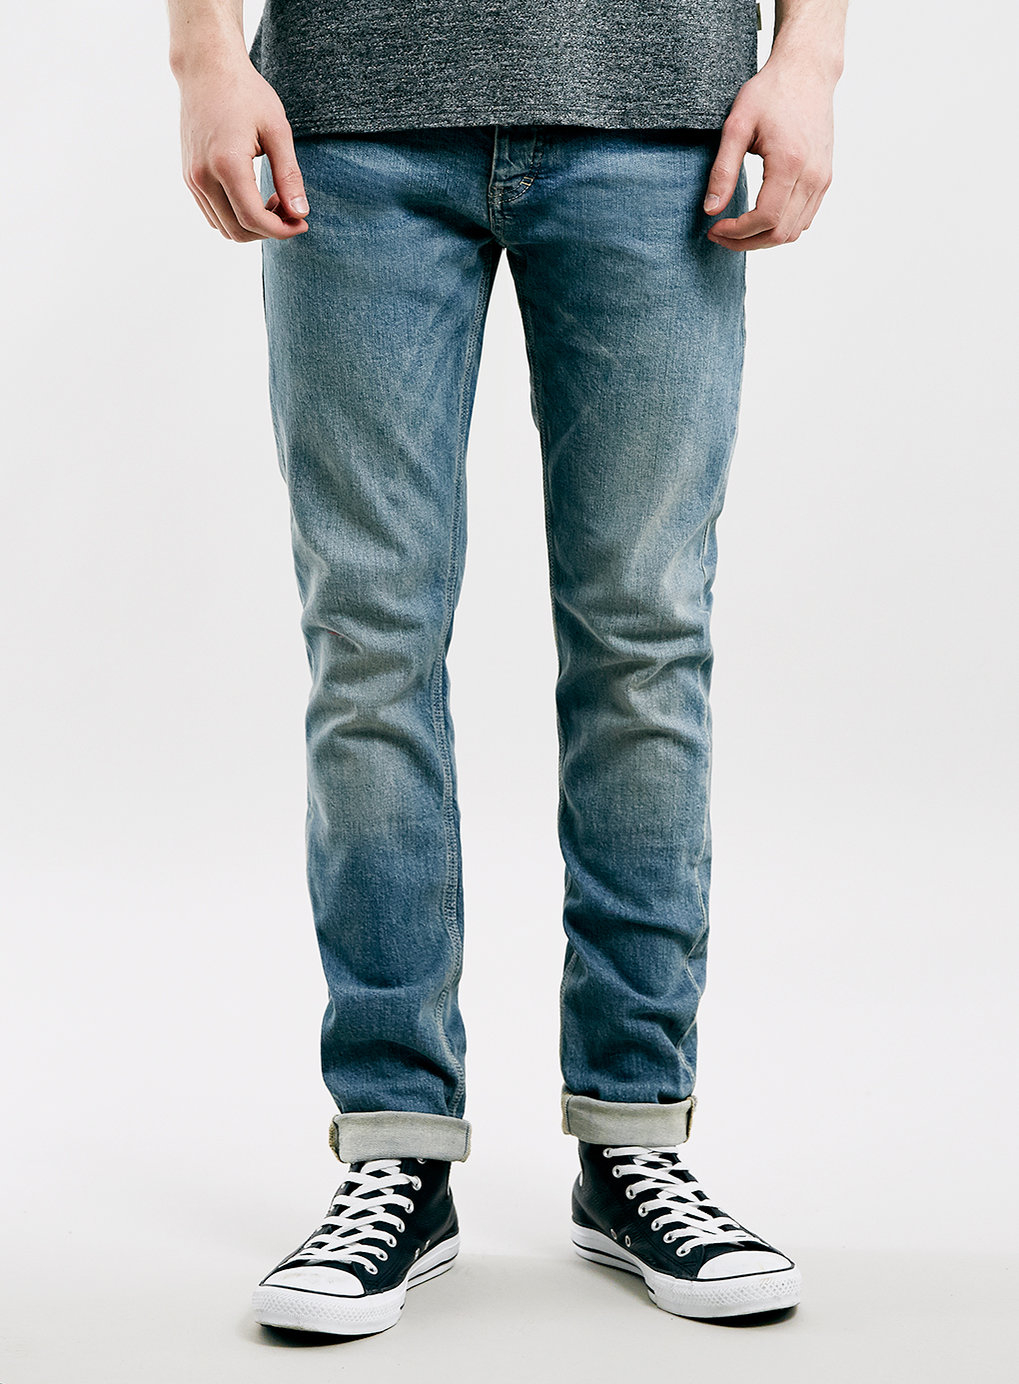 light blue jeans mens roll